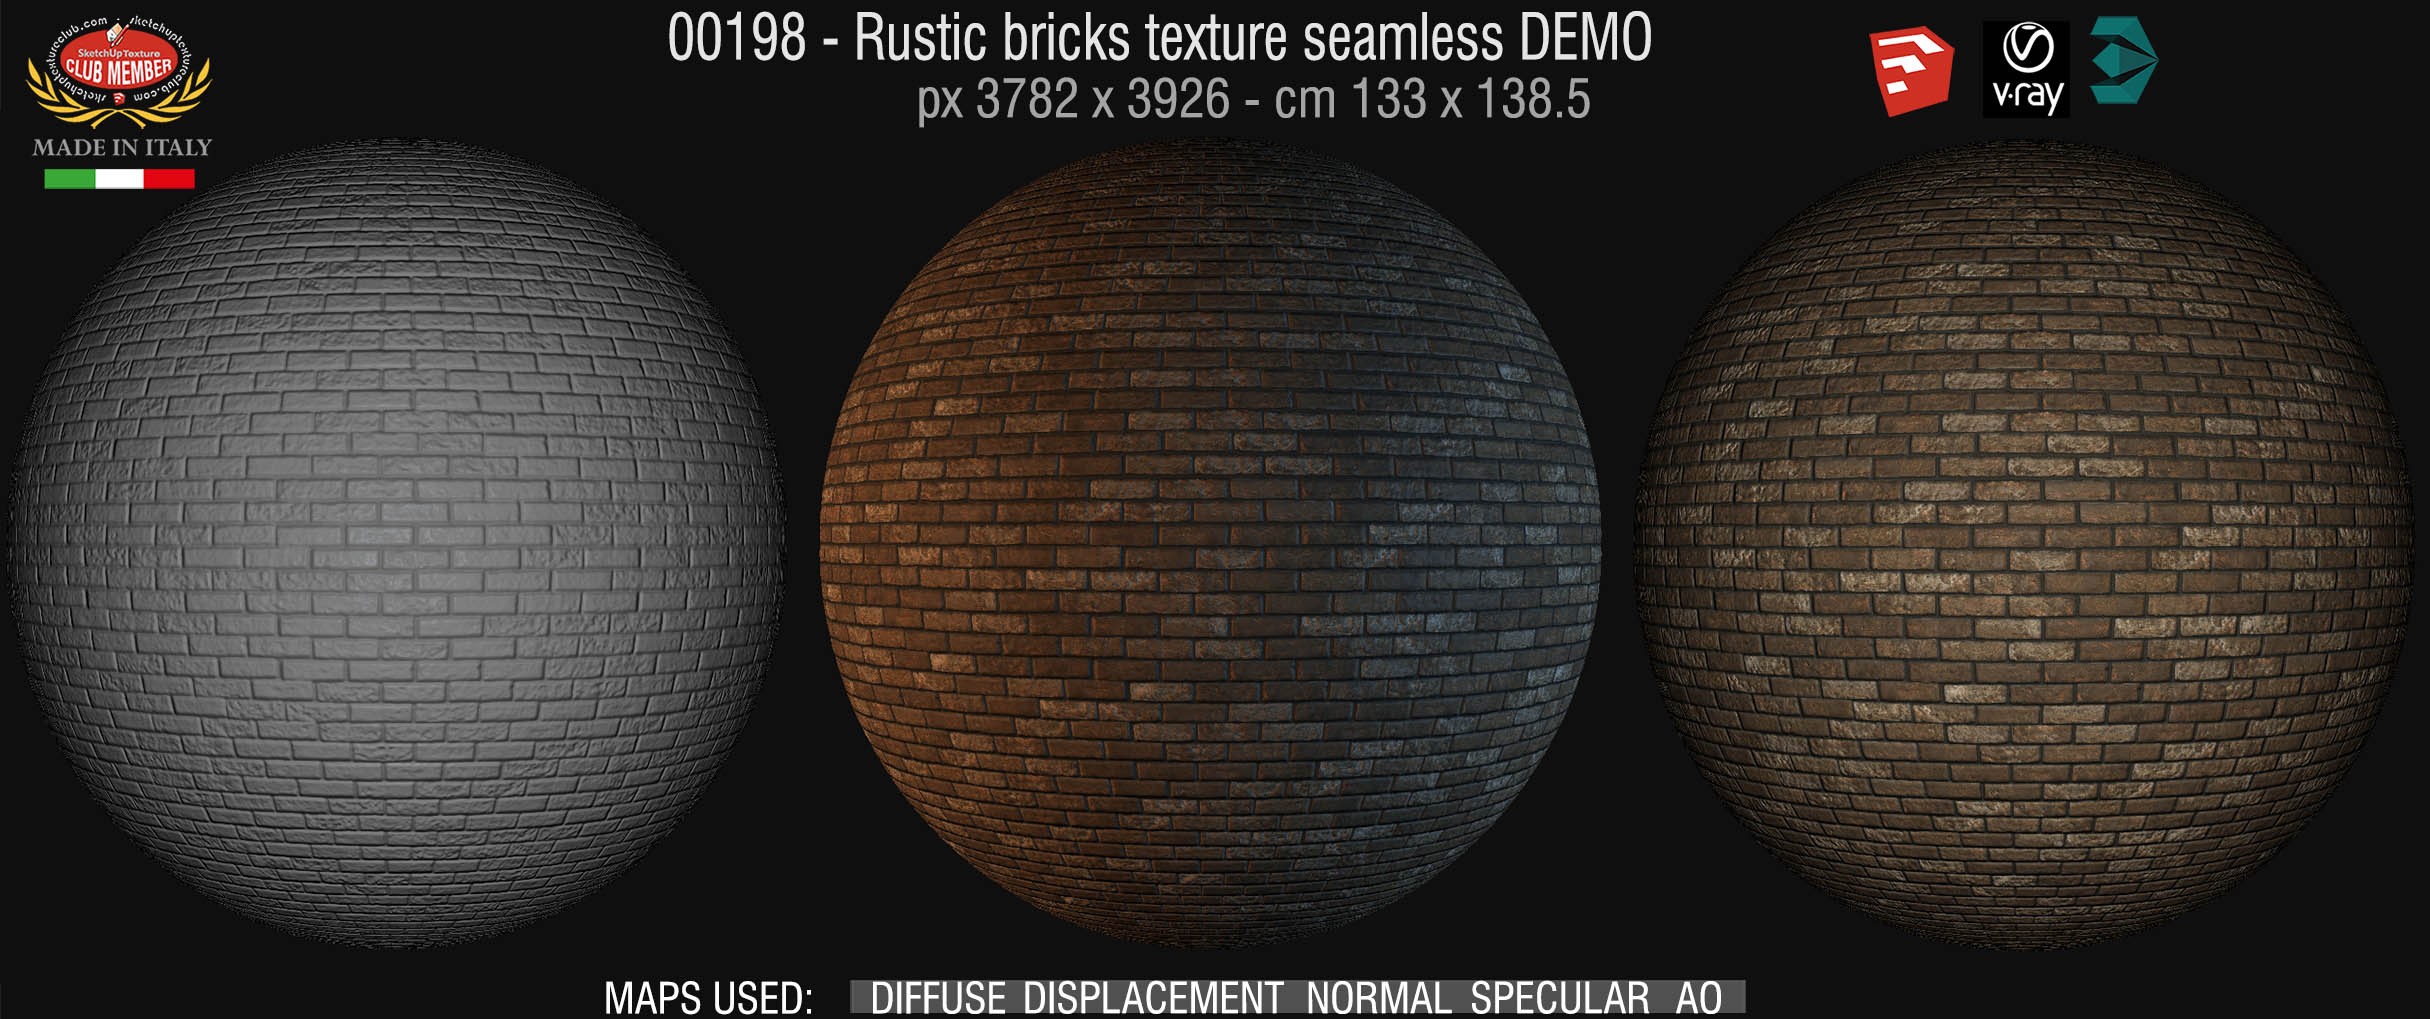 00198 Rustic bricks texture seamless + maps DEMO